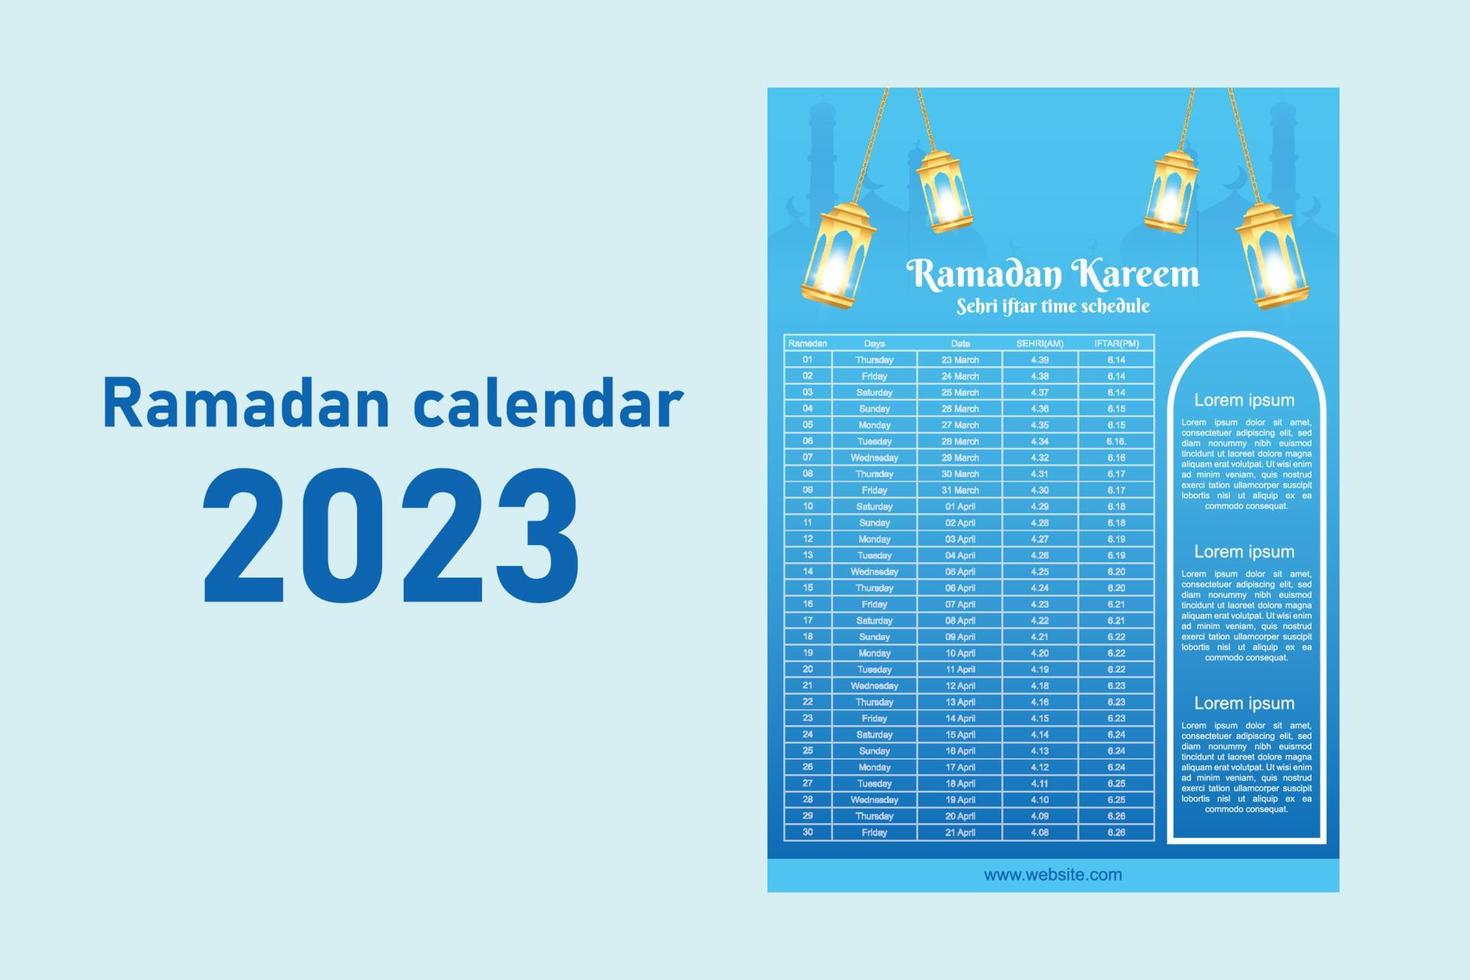 Ramadan kareem islamic calendar template and sehri ifter time schedule vector